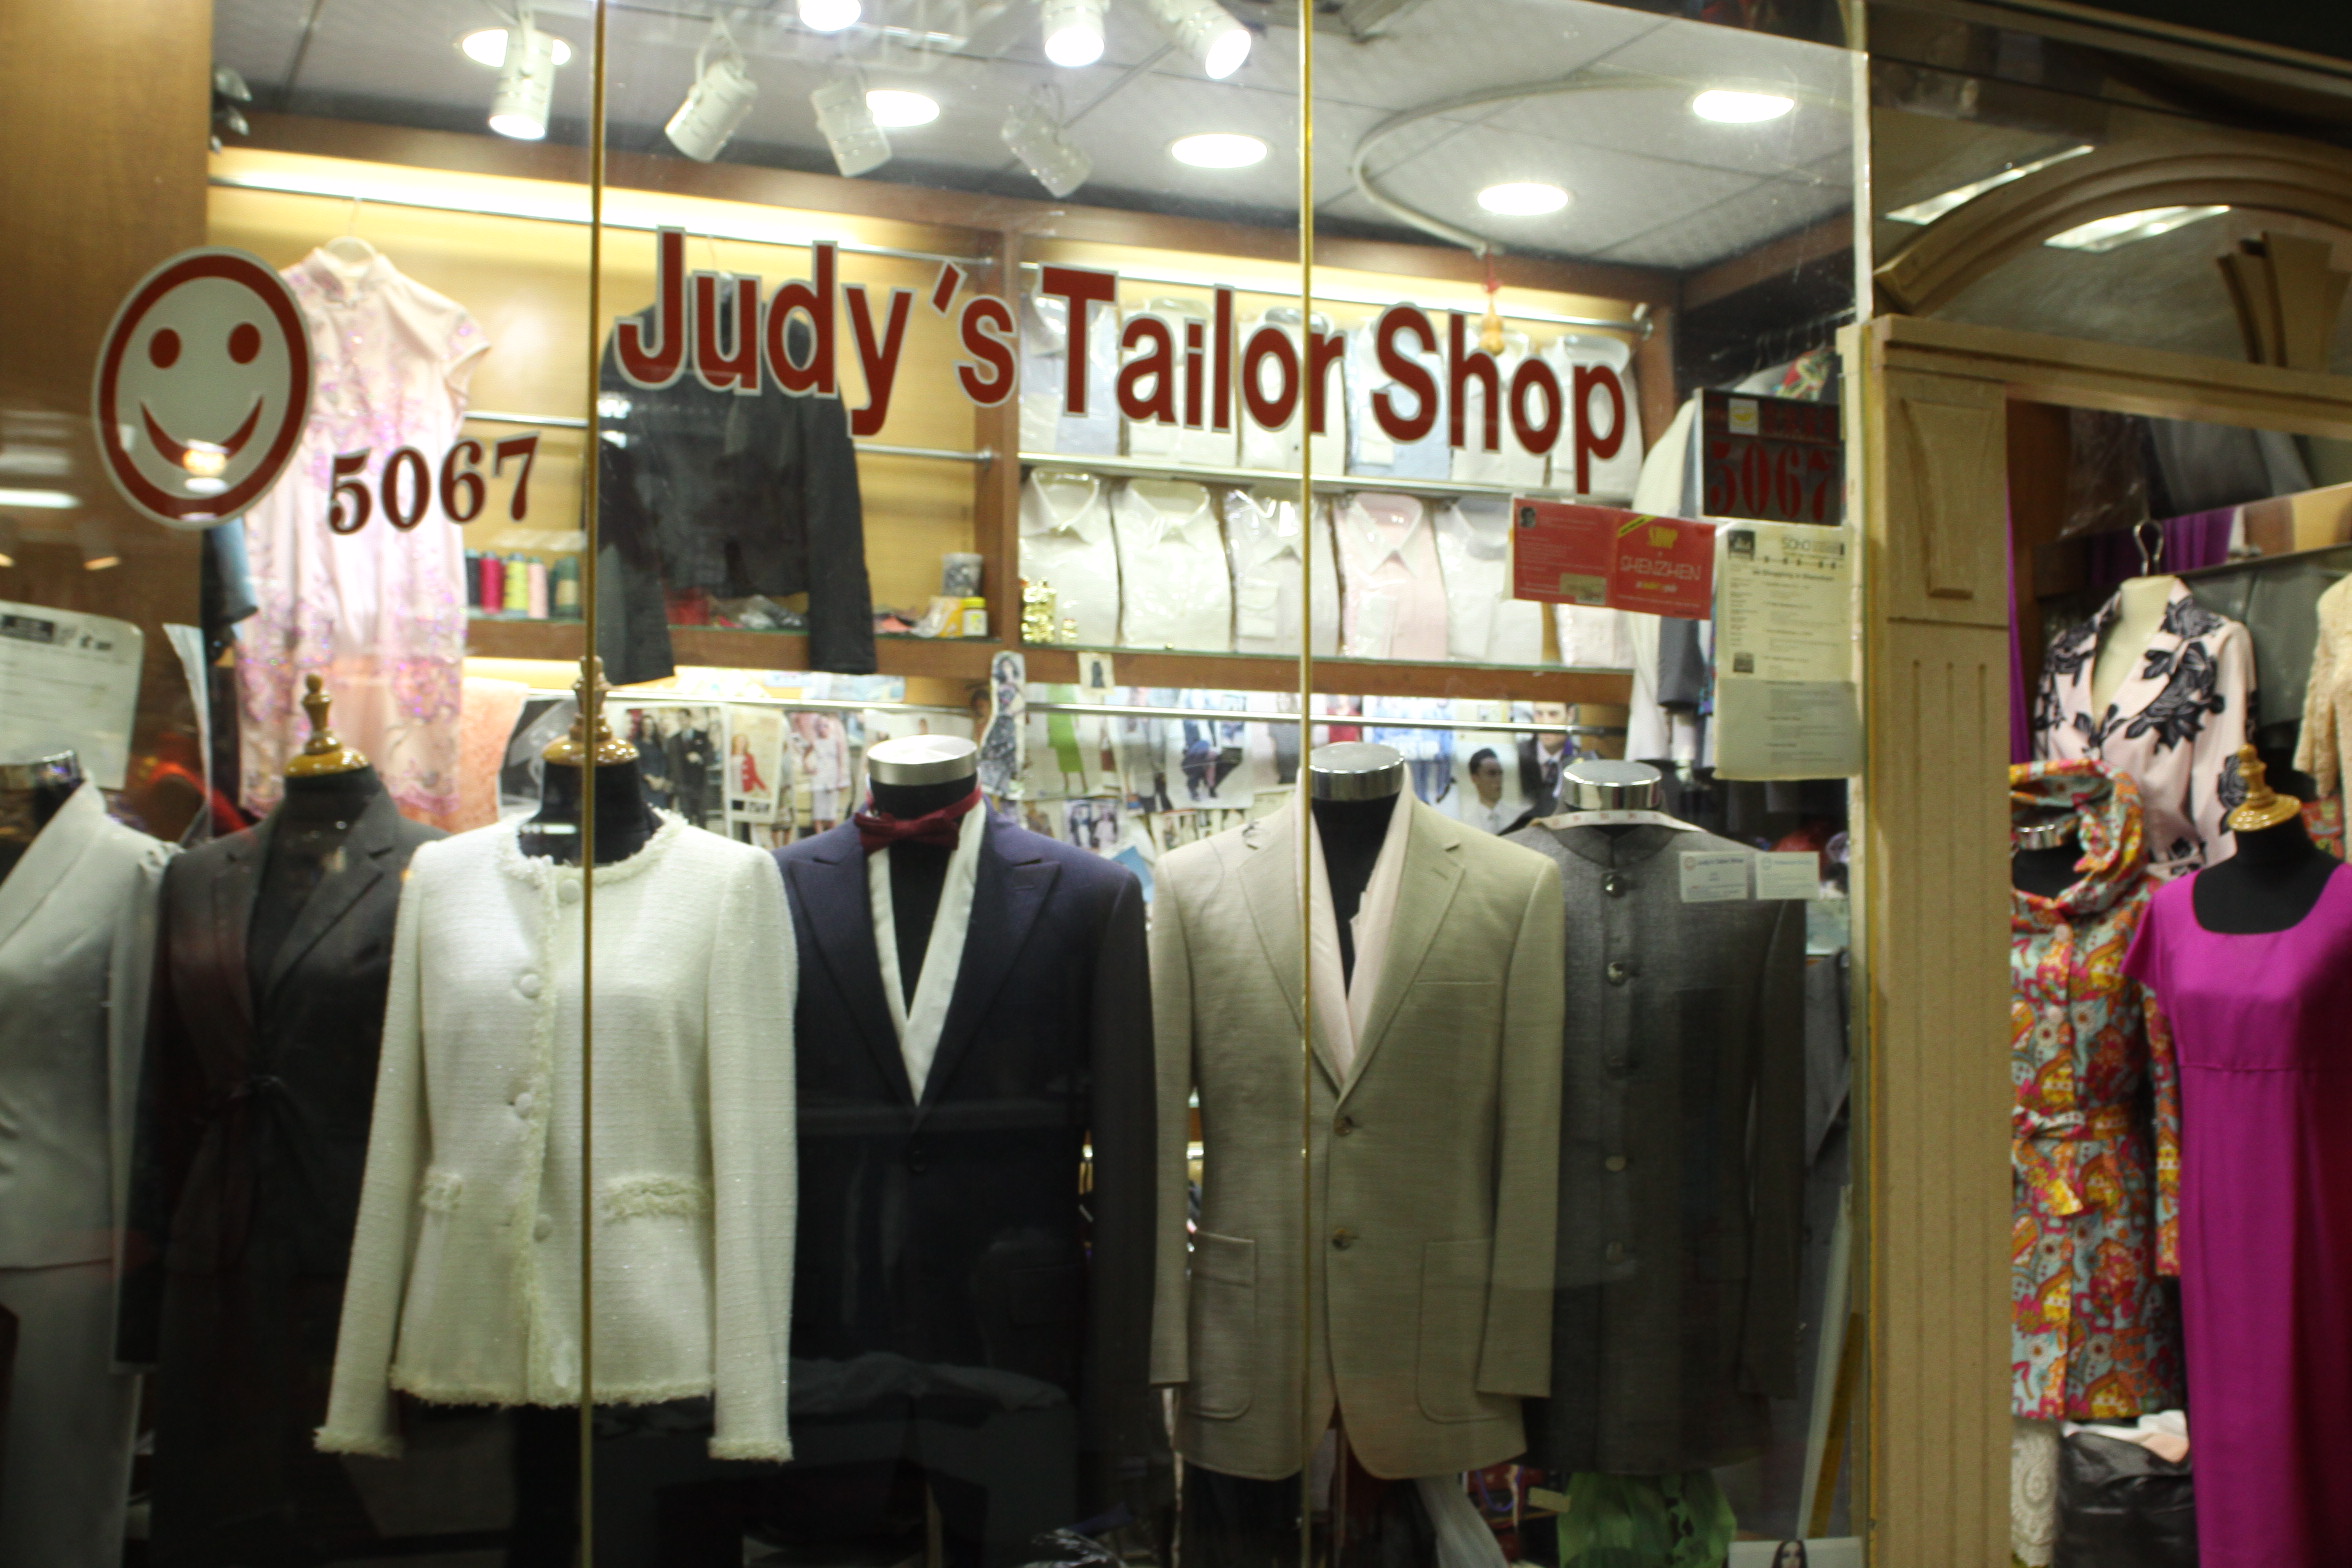 judy's tailor shop